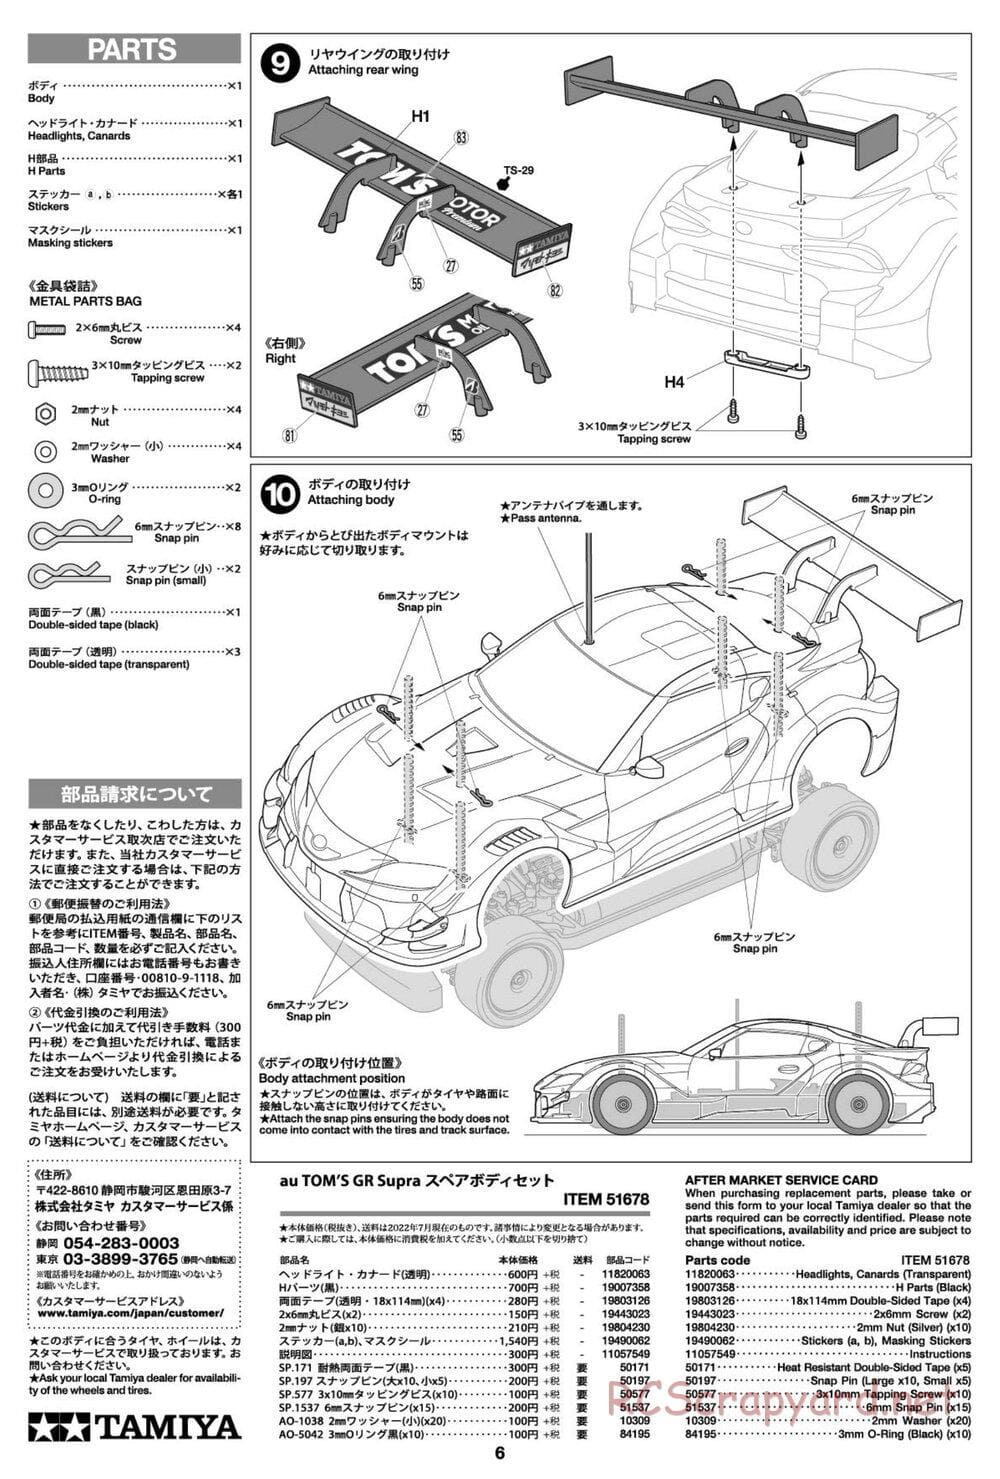 Tamiya - au TOM'S GR Supra - TT-02 Chassis - Body Manual - Page 6